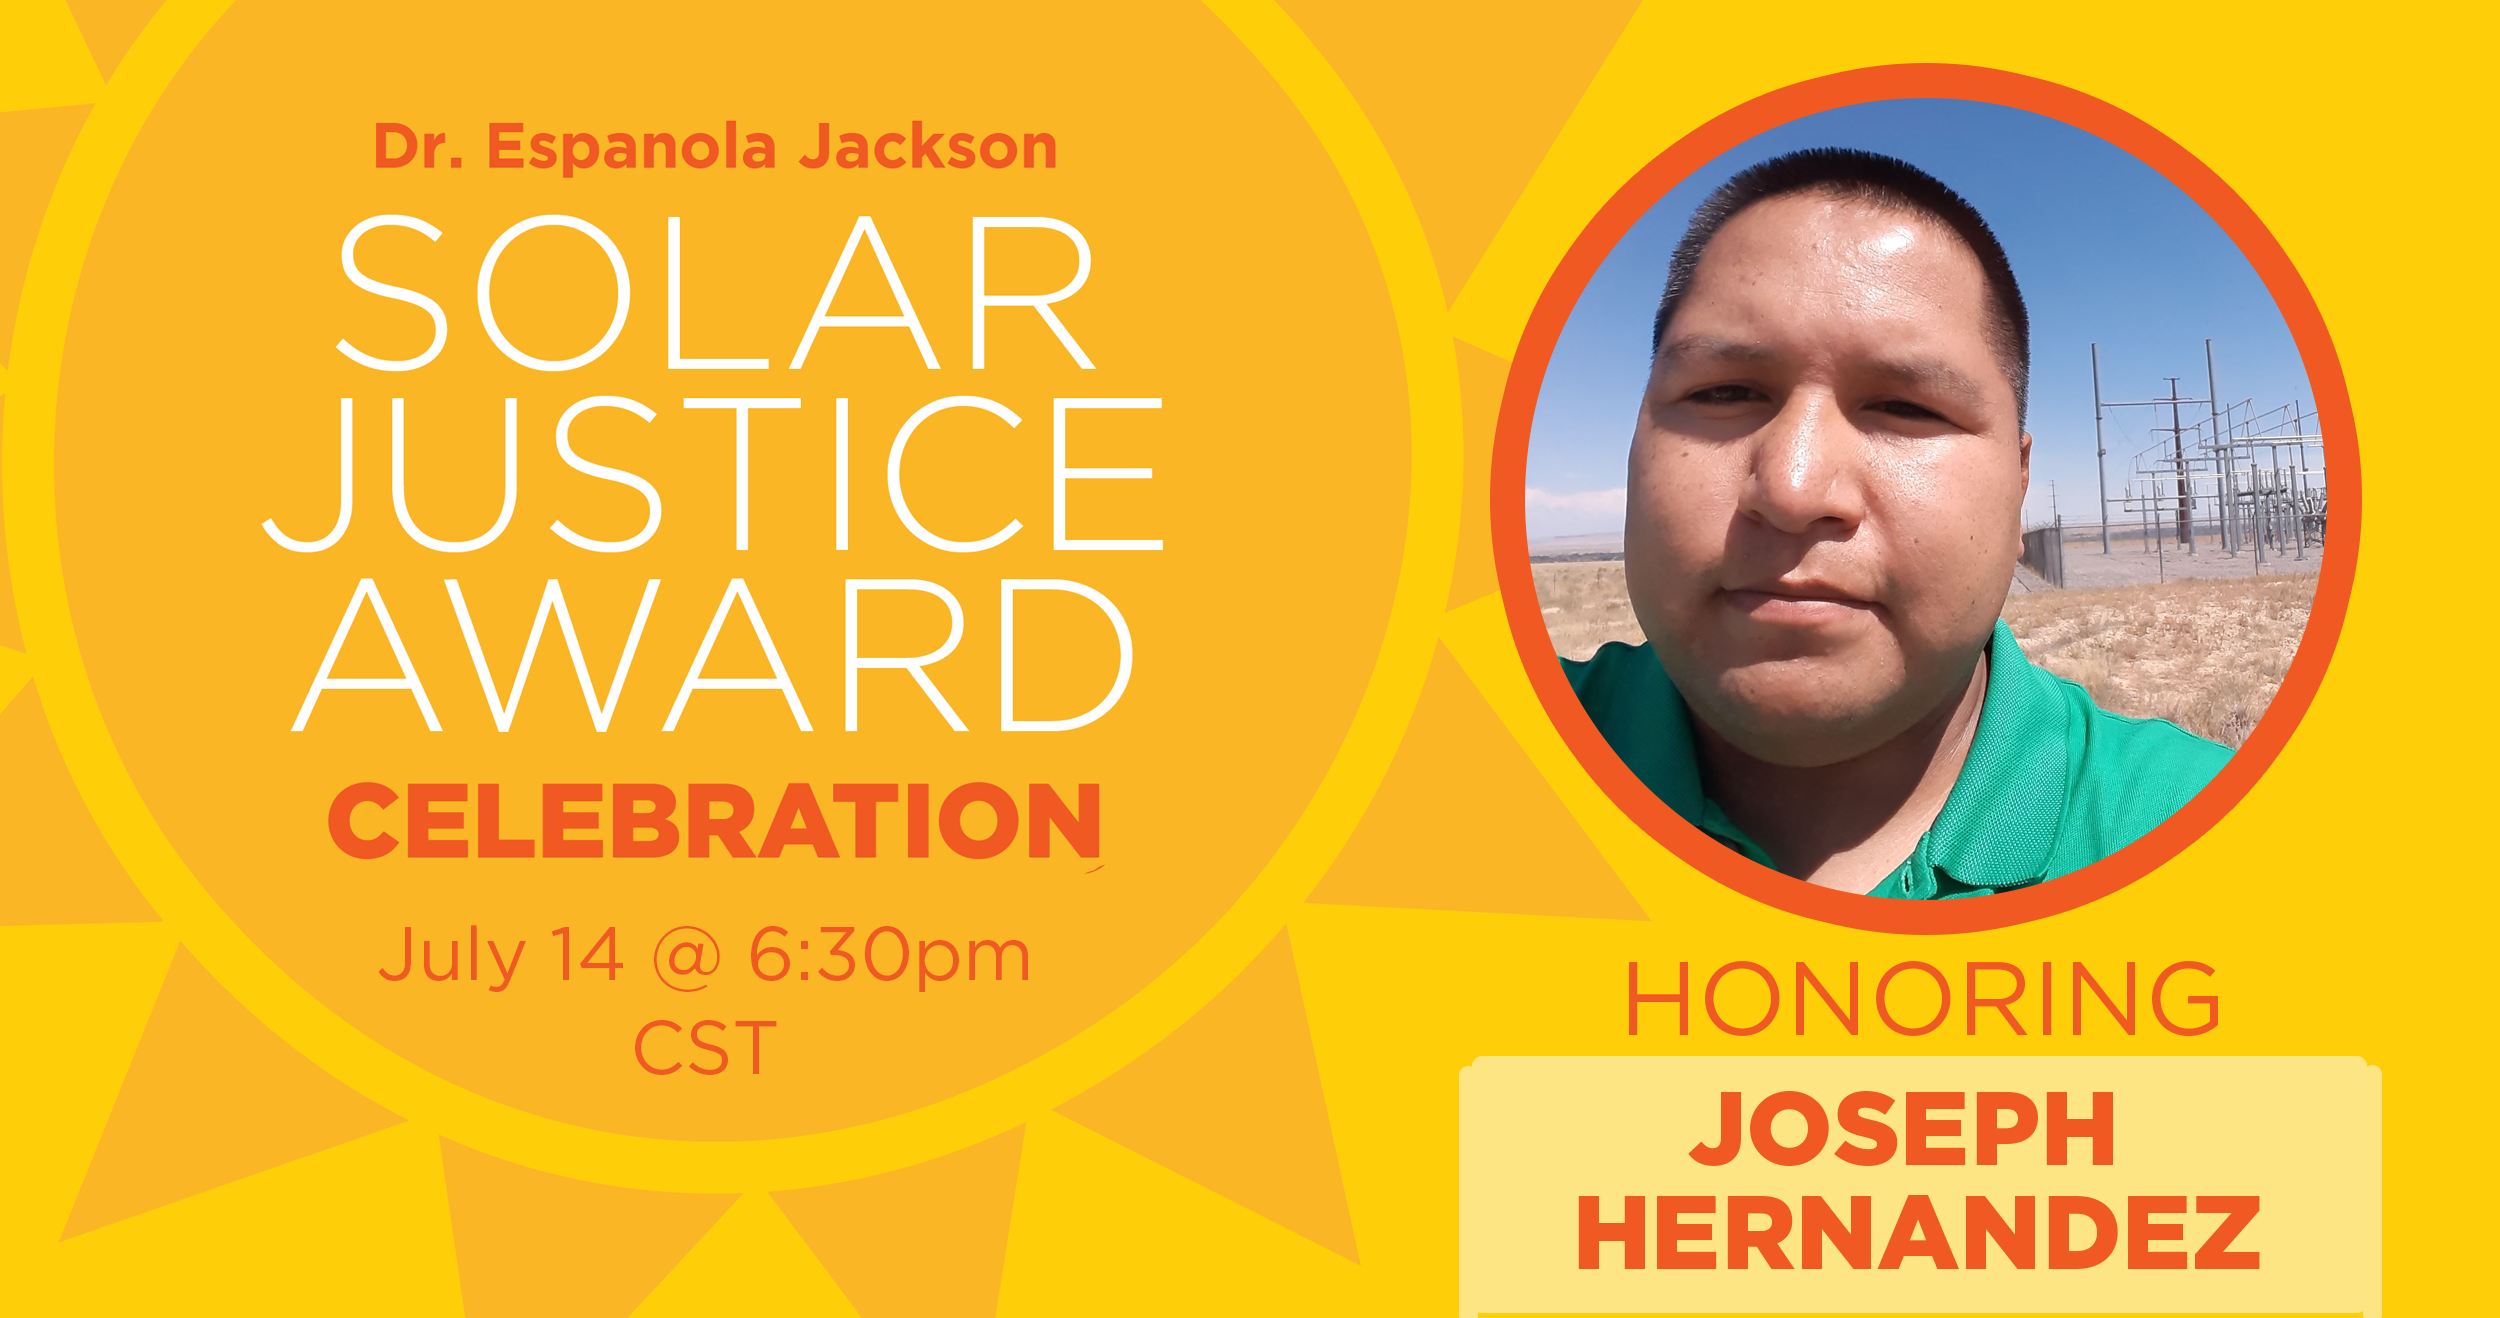 Honoring Joseph Hernandez at the 2021 Dr. Espanola Jackson Solar Justice Award Virtual Celebration